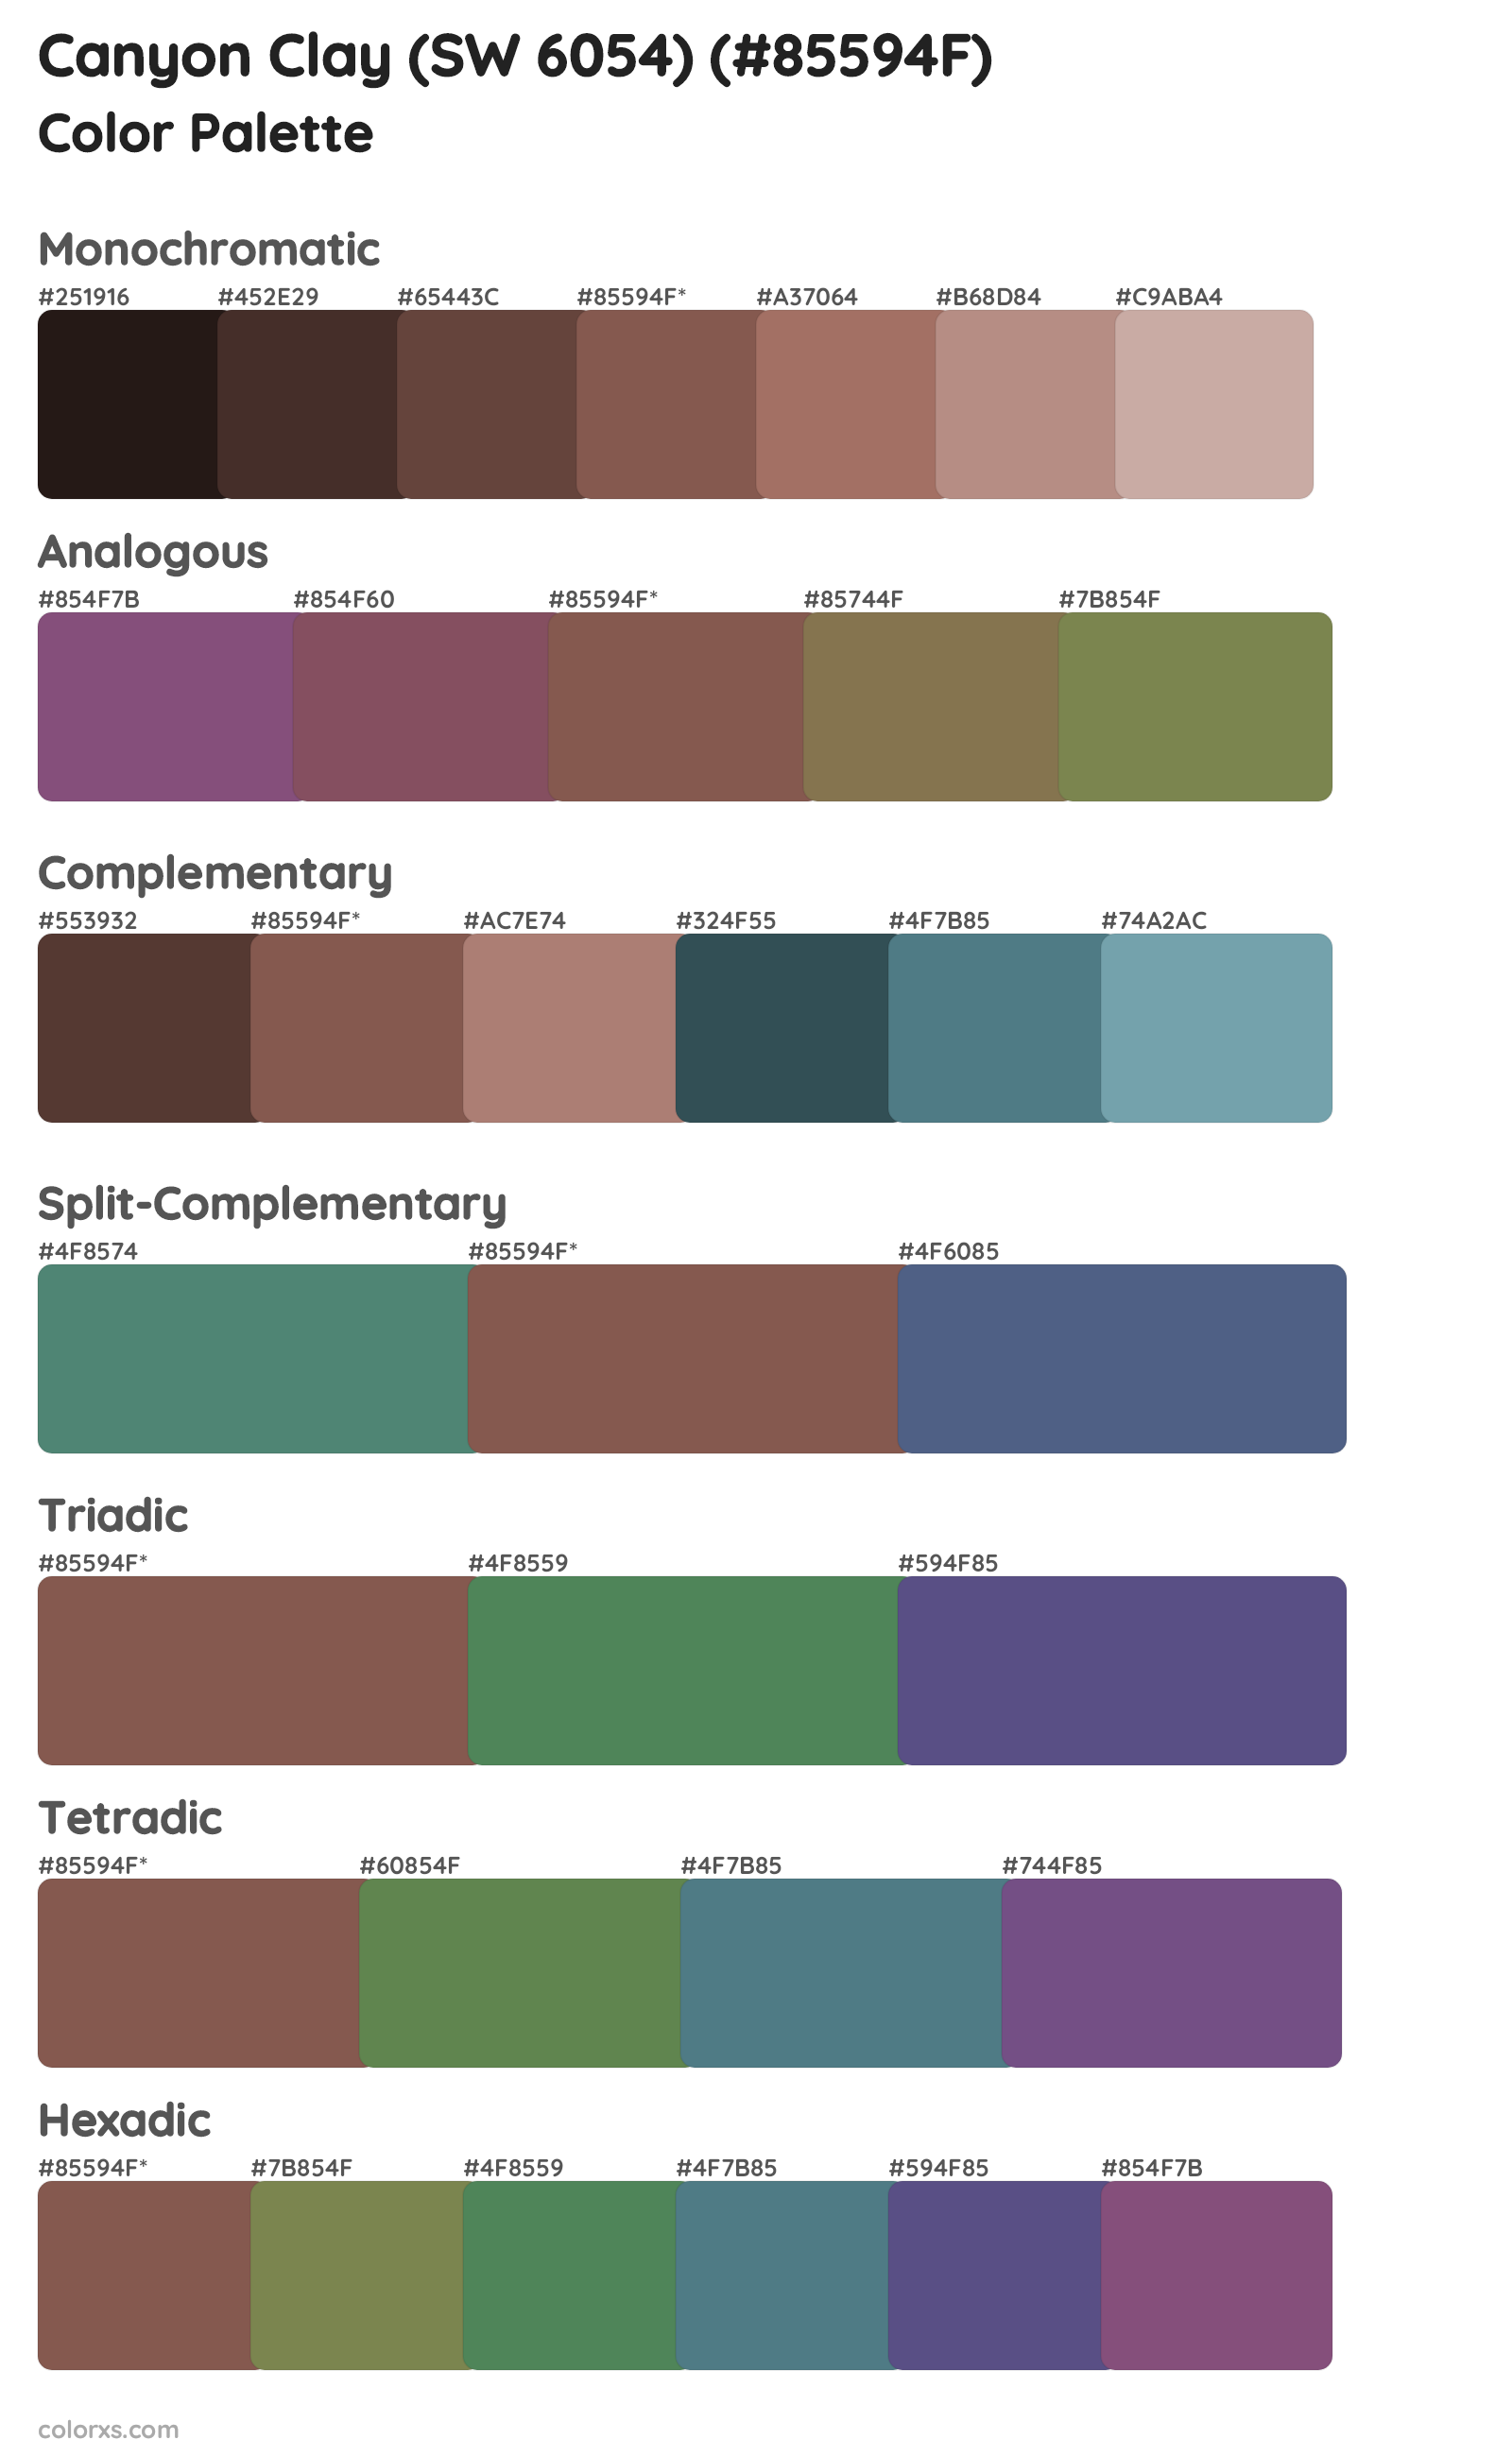 Canyon Clay (SW 6054) Color Scheme Palettes